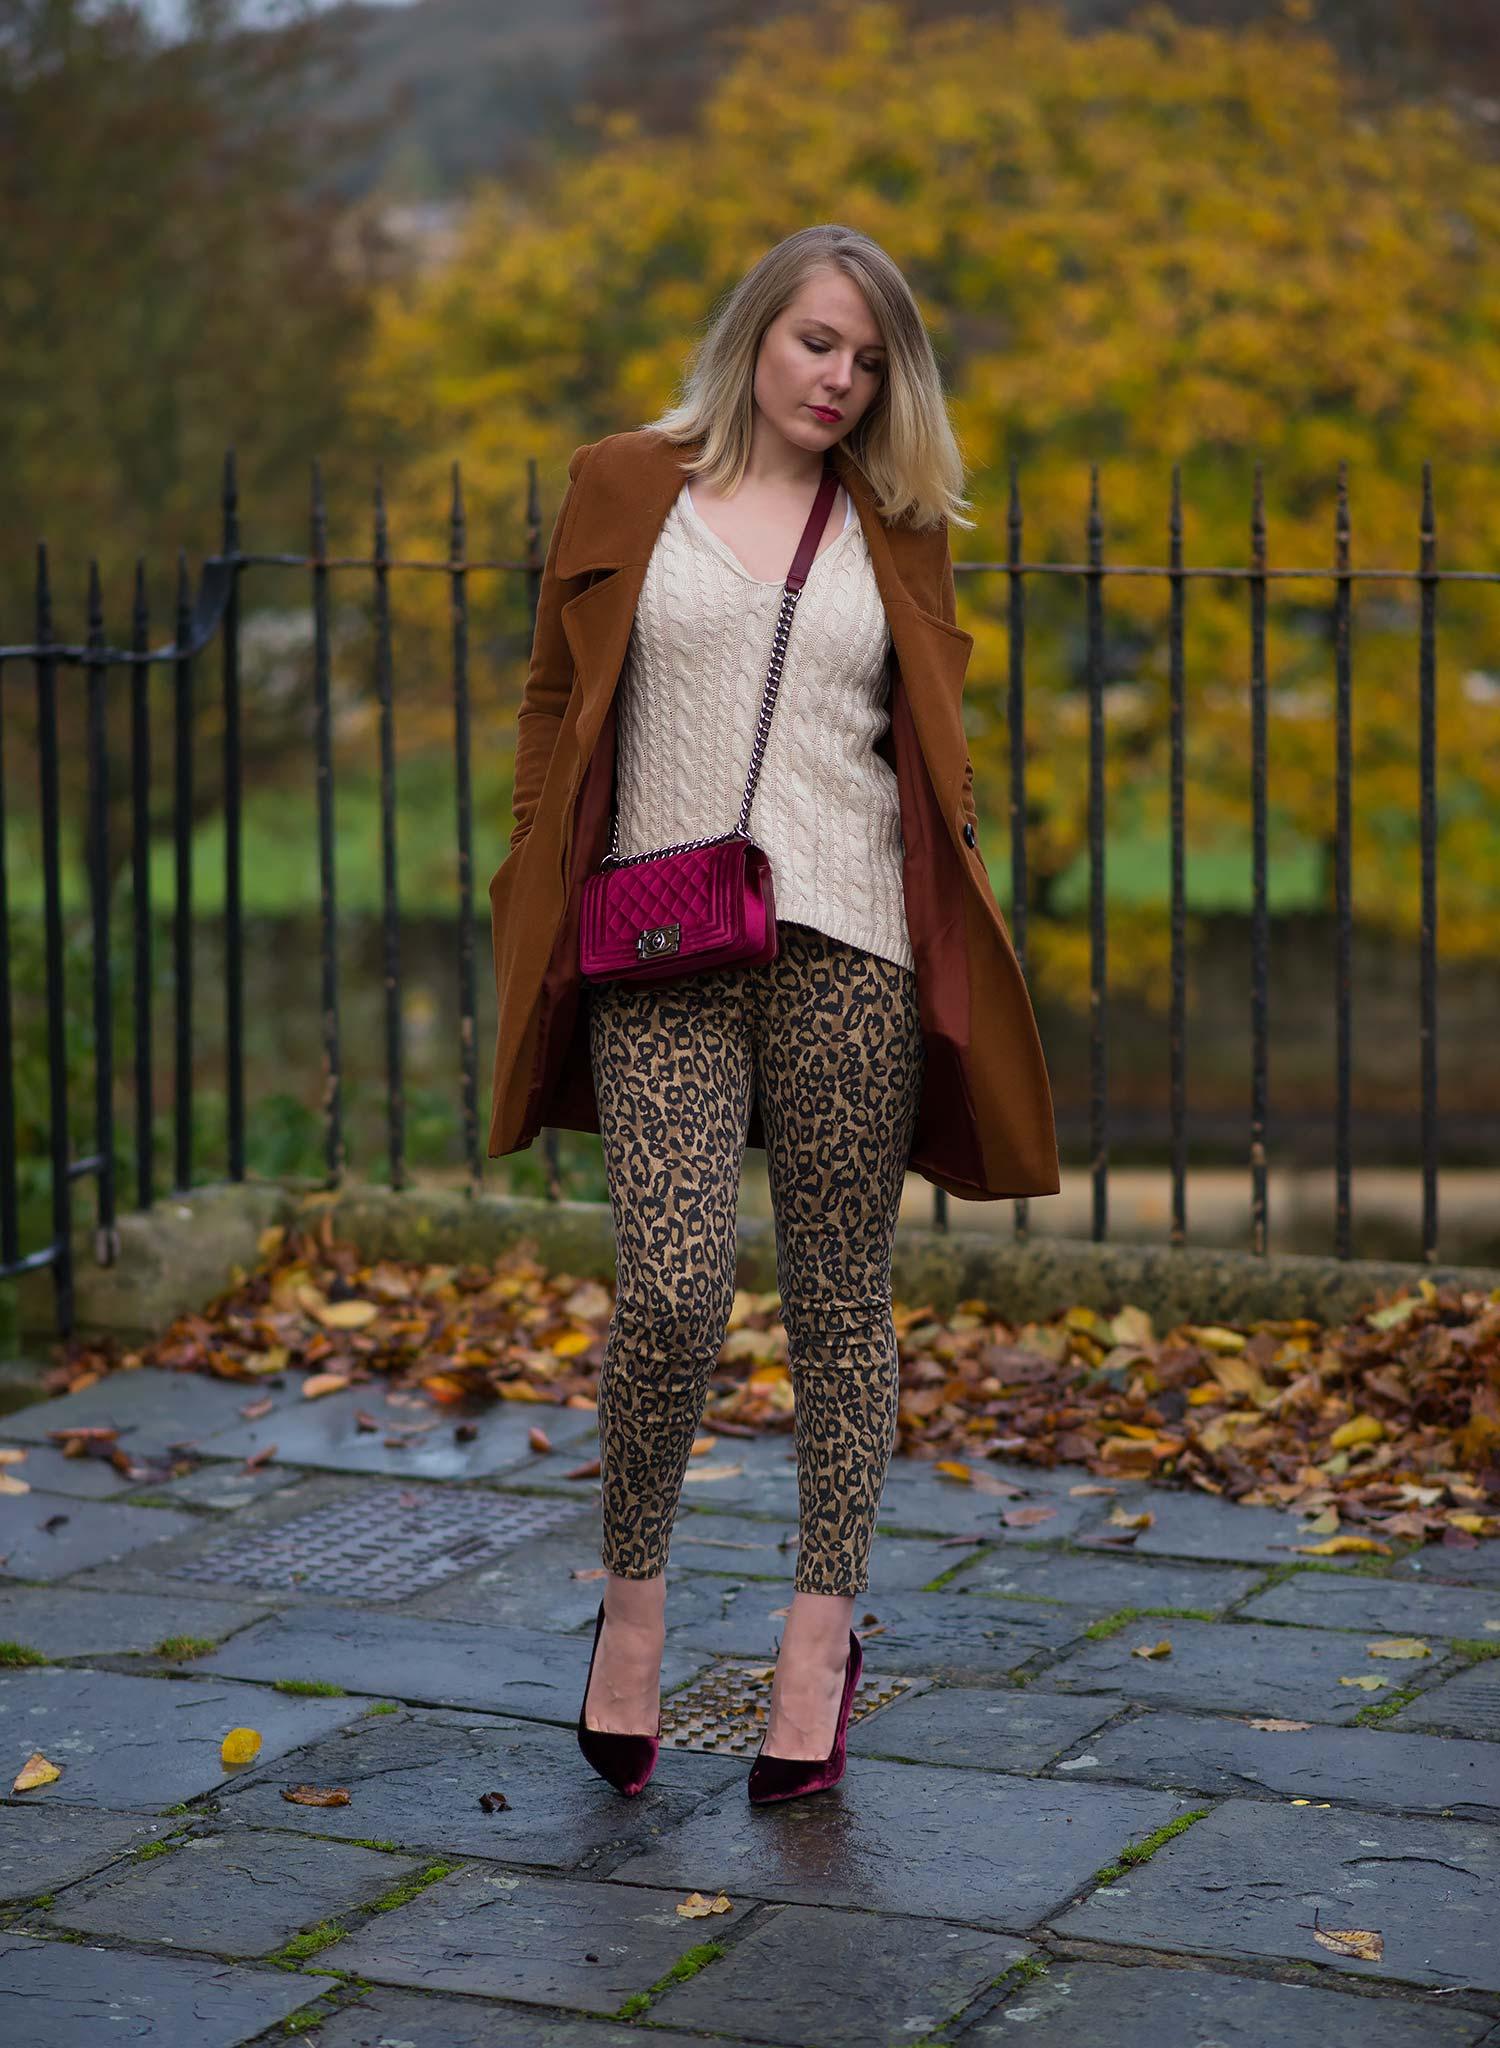 lorna-burford-leopard-jeans-velvet-bag-outfit-street-style